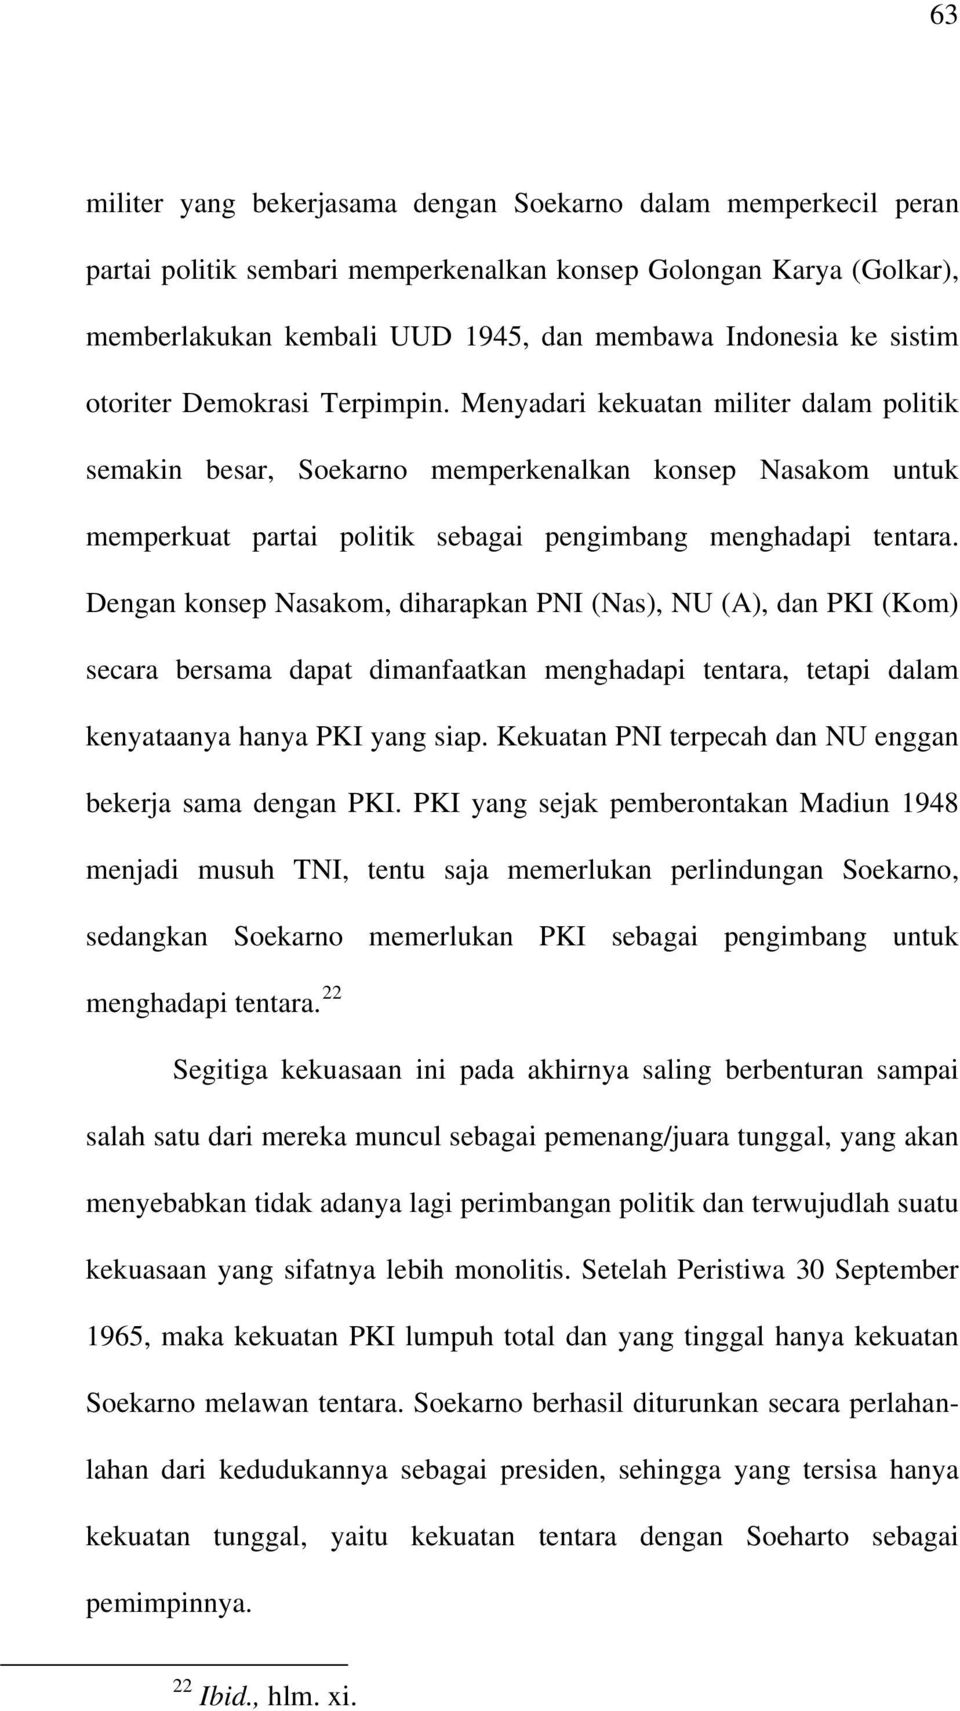 Menyadari kekuatan militer dalam politik semakin besar, Soekarno memperkenalkan konsep Nasakom untuk memperkuat partai politik sebagai pengimbang menghadapi tentara.